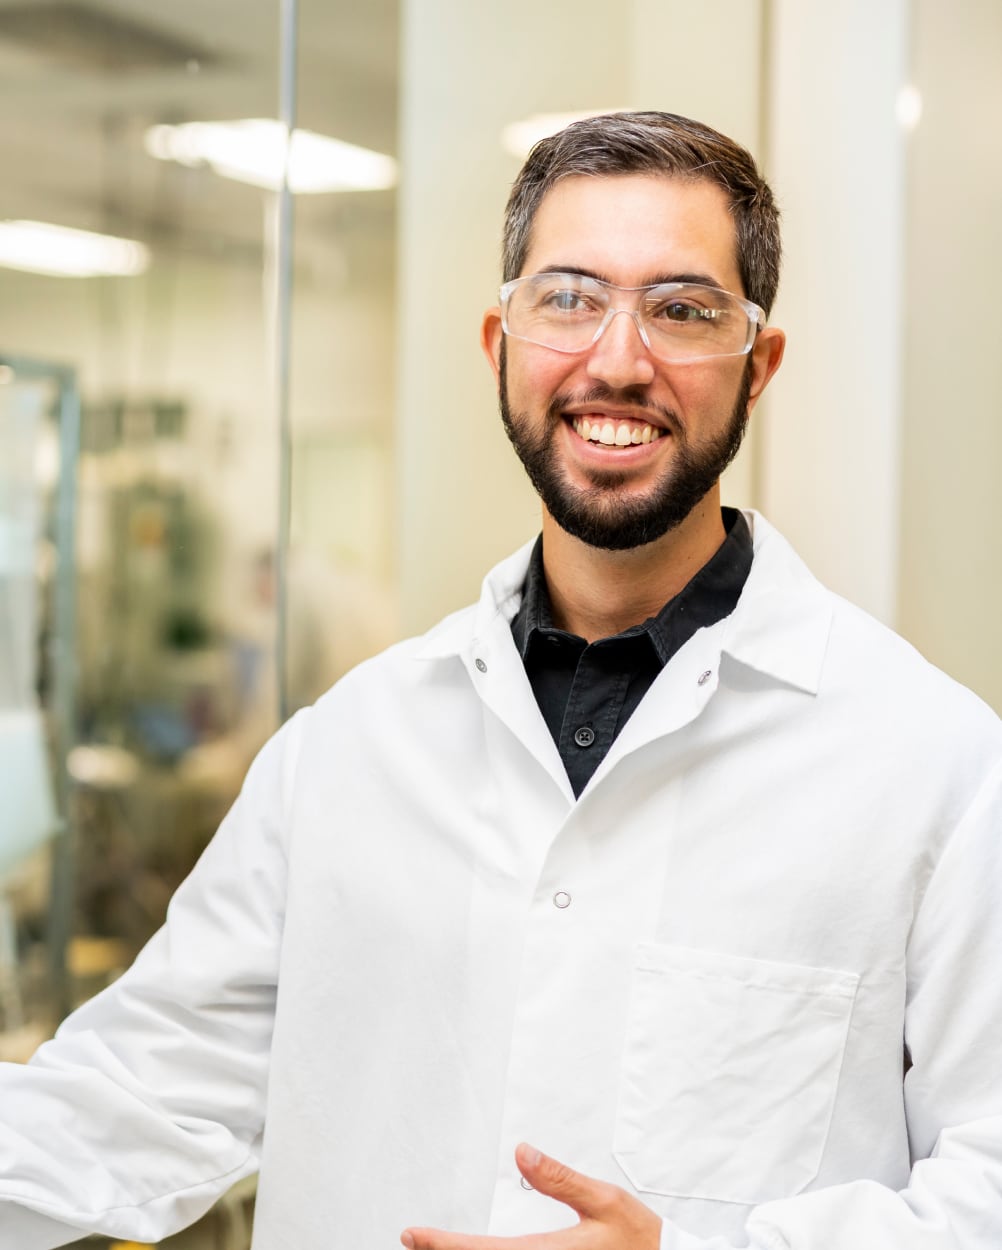 Man in lab gear smiling